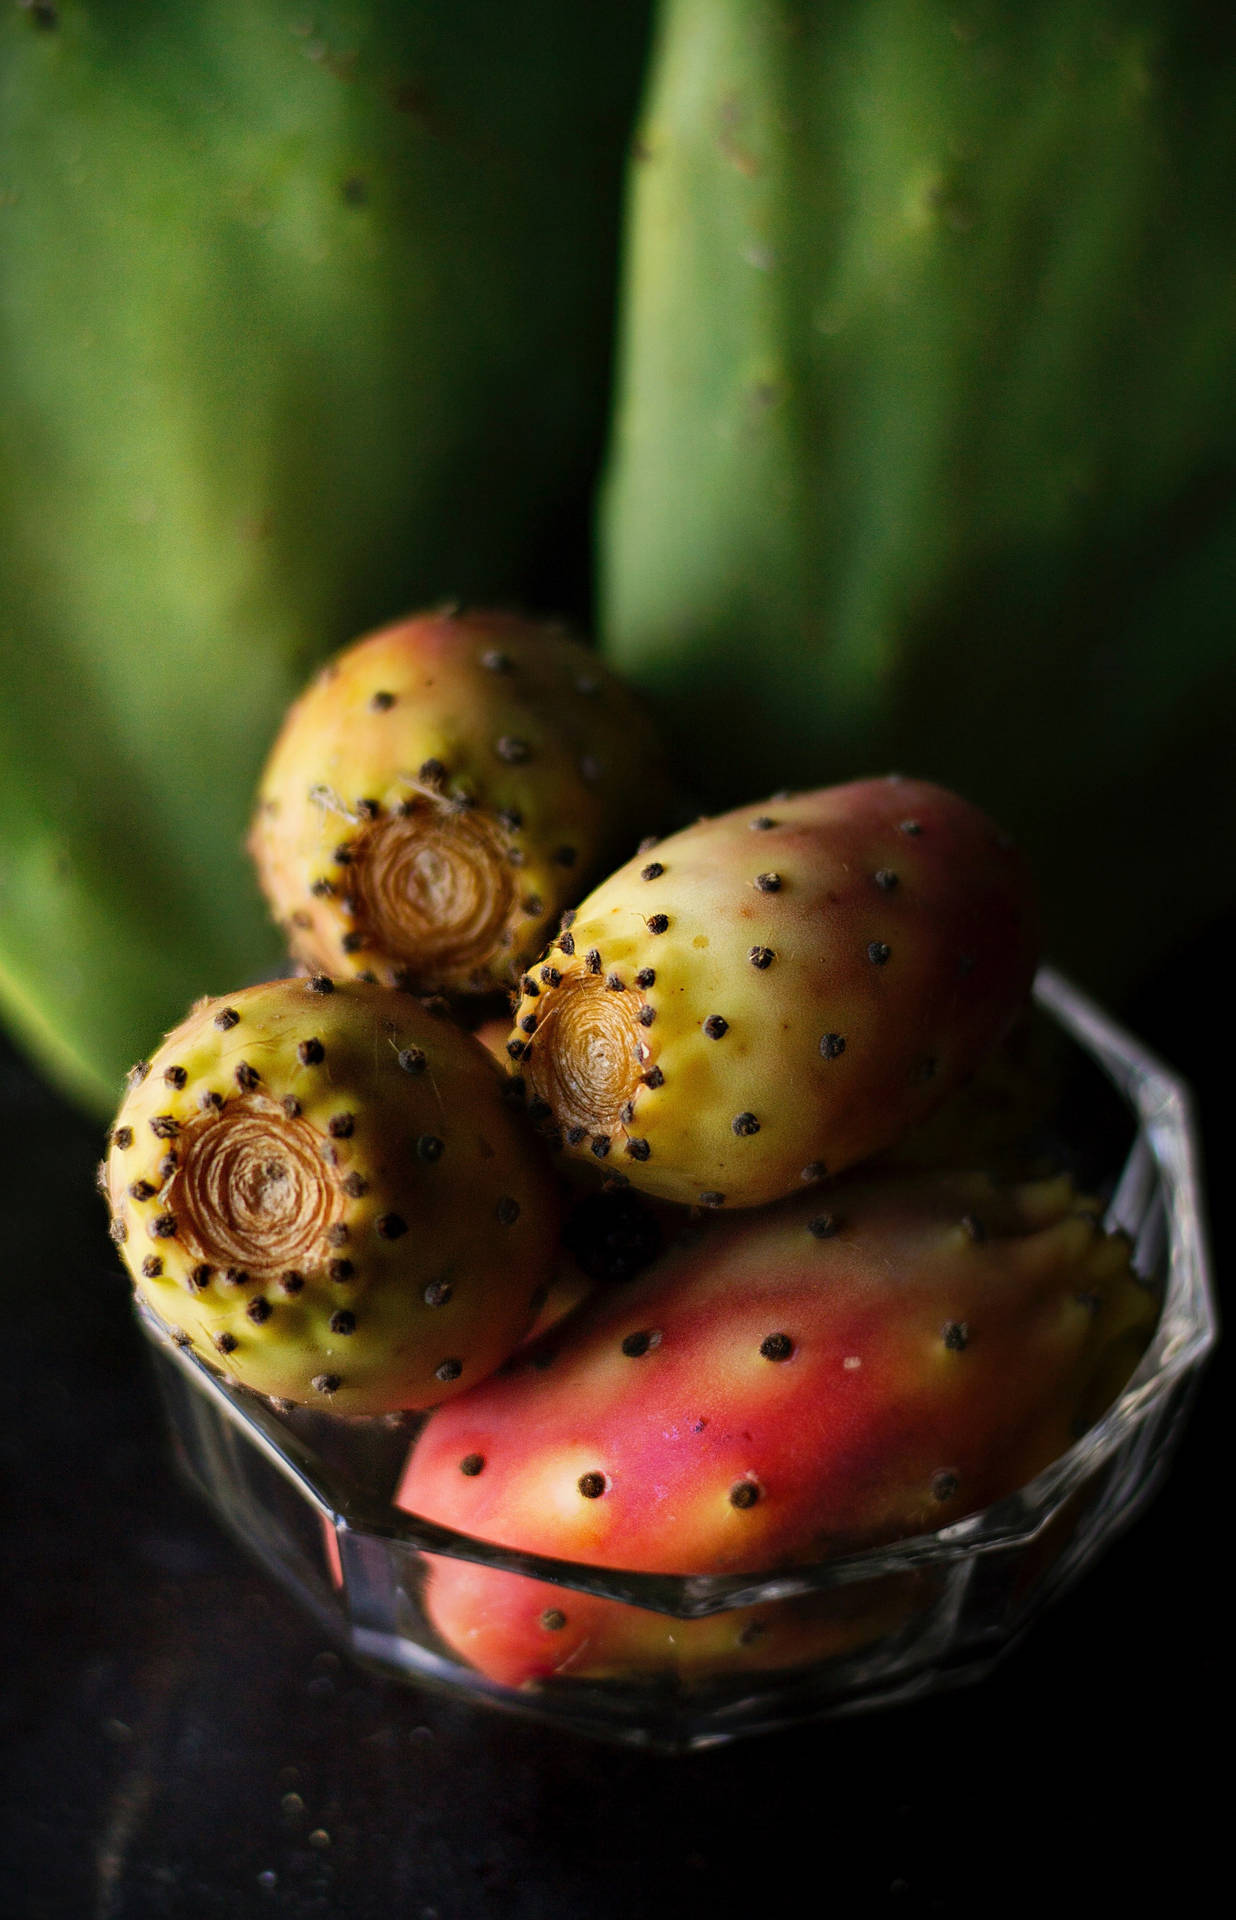 Prickly Pear Fruit Wallpaper